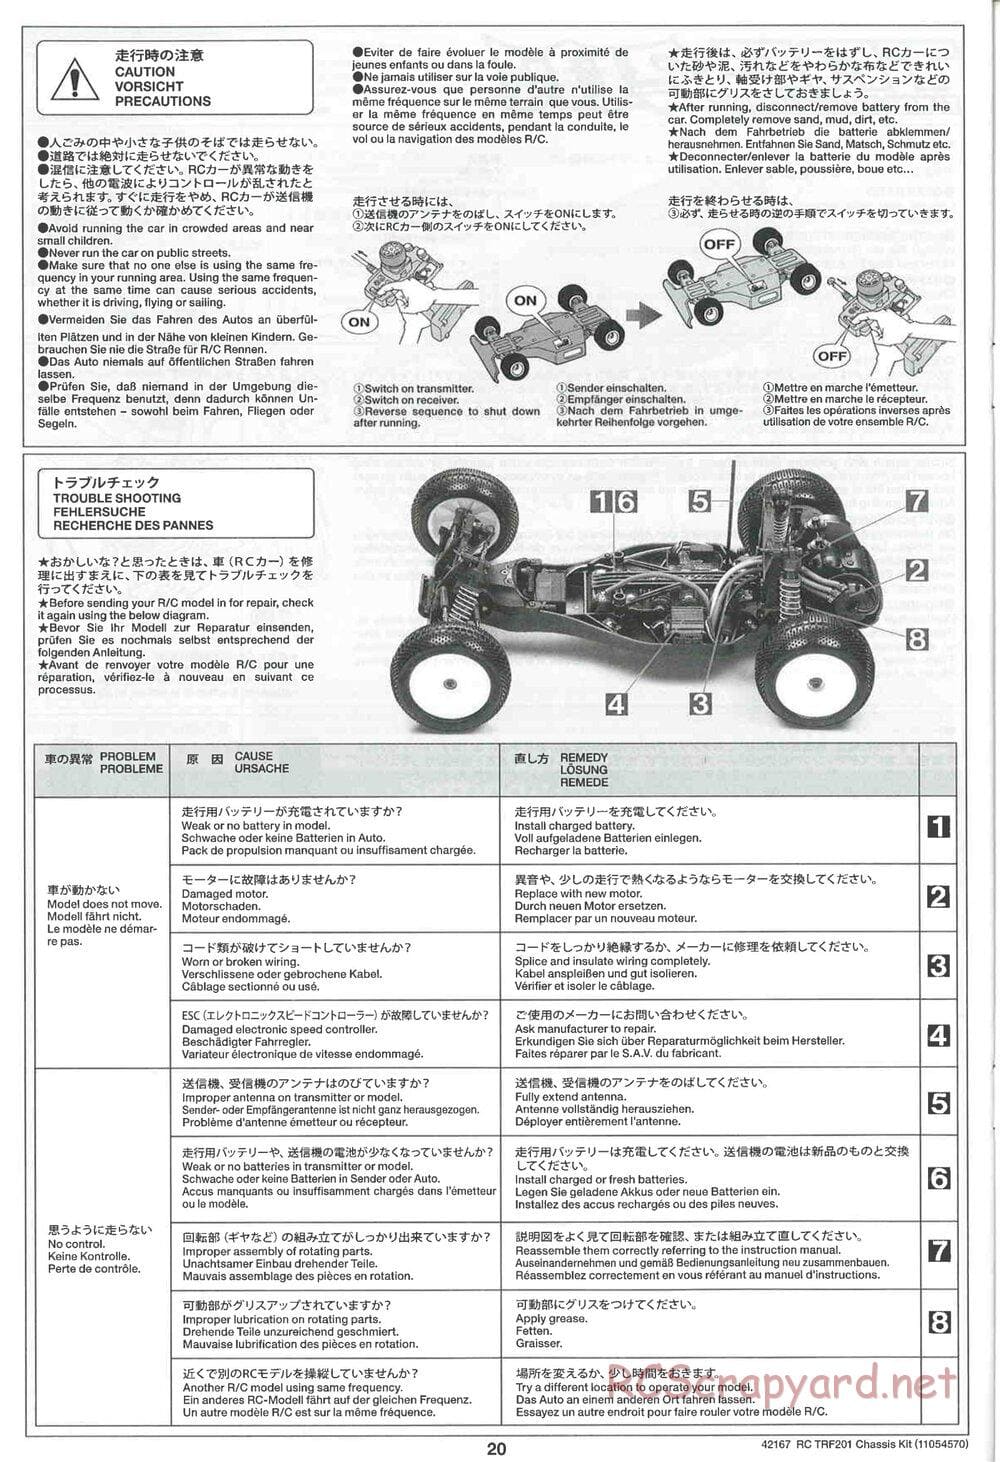 Tamiya - TRF201 Chassis - Manual - Page 20